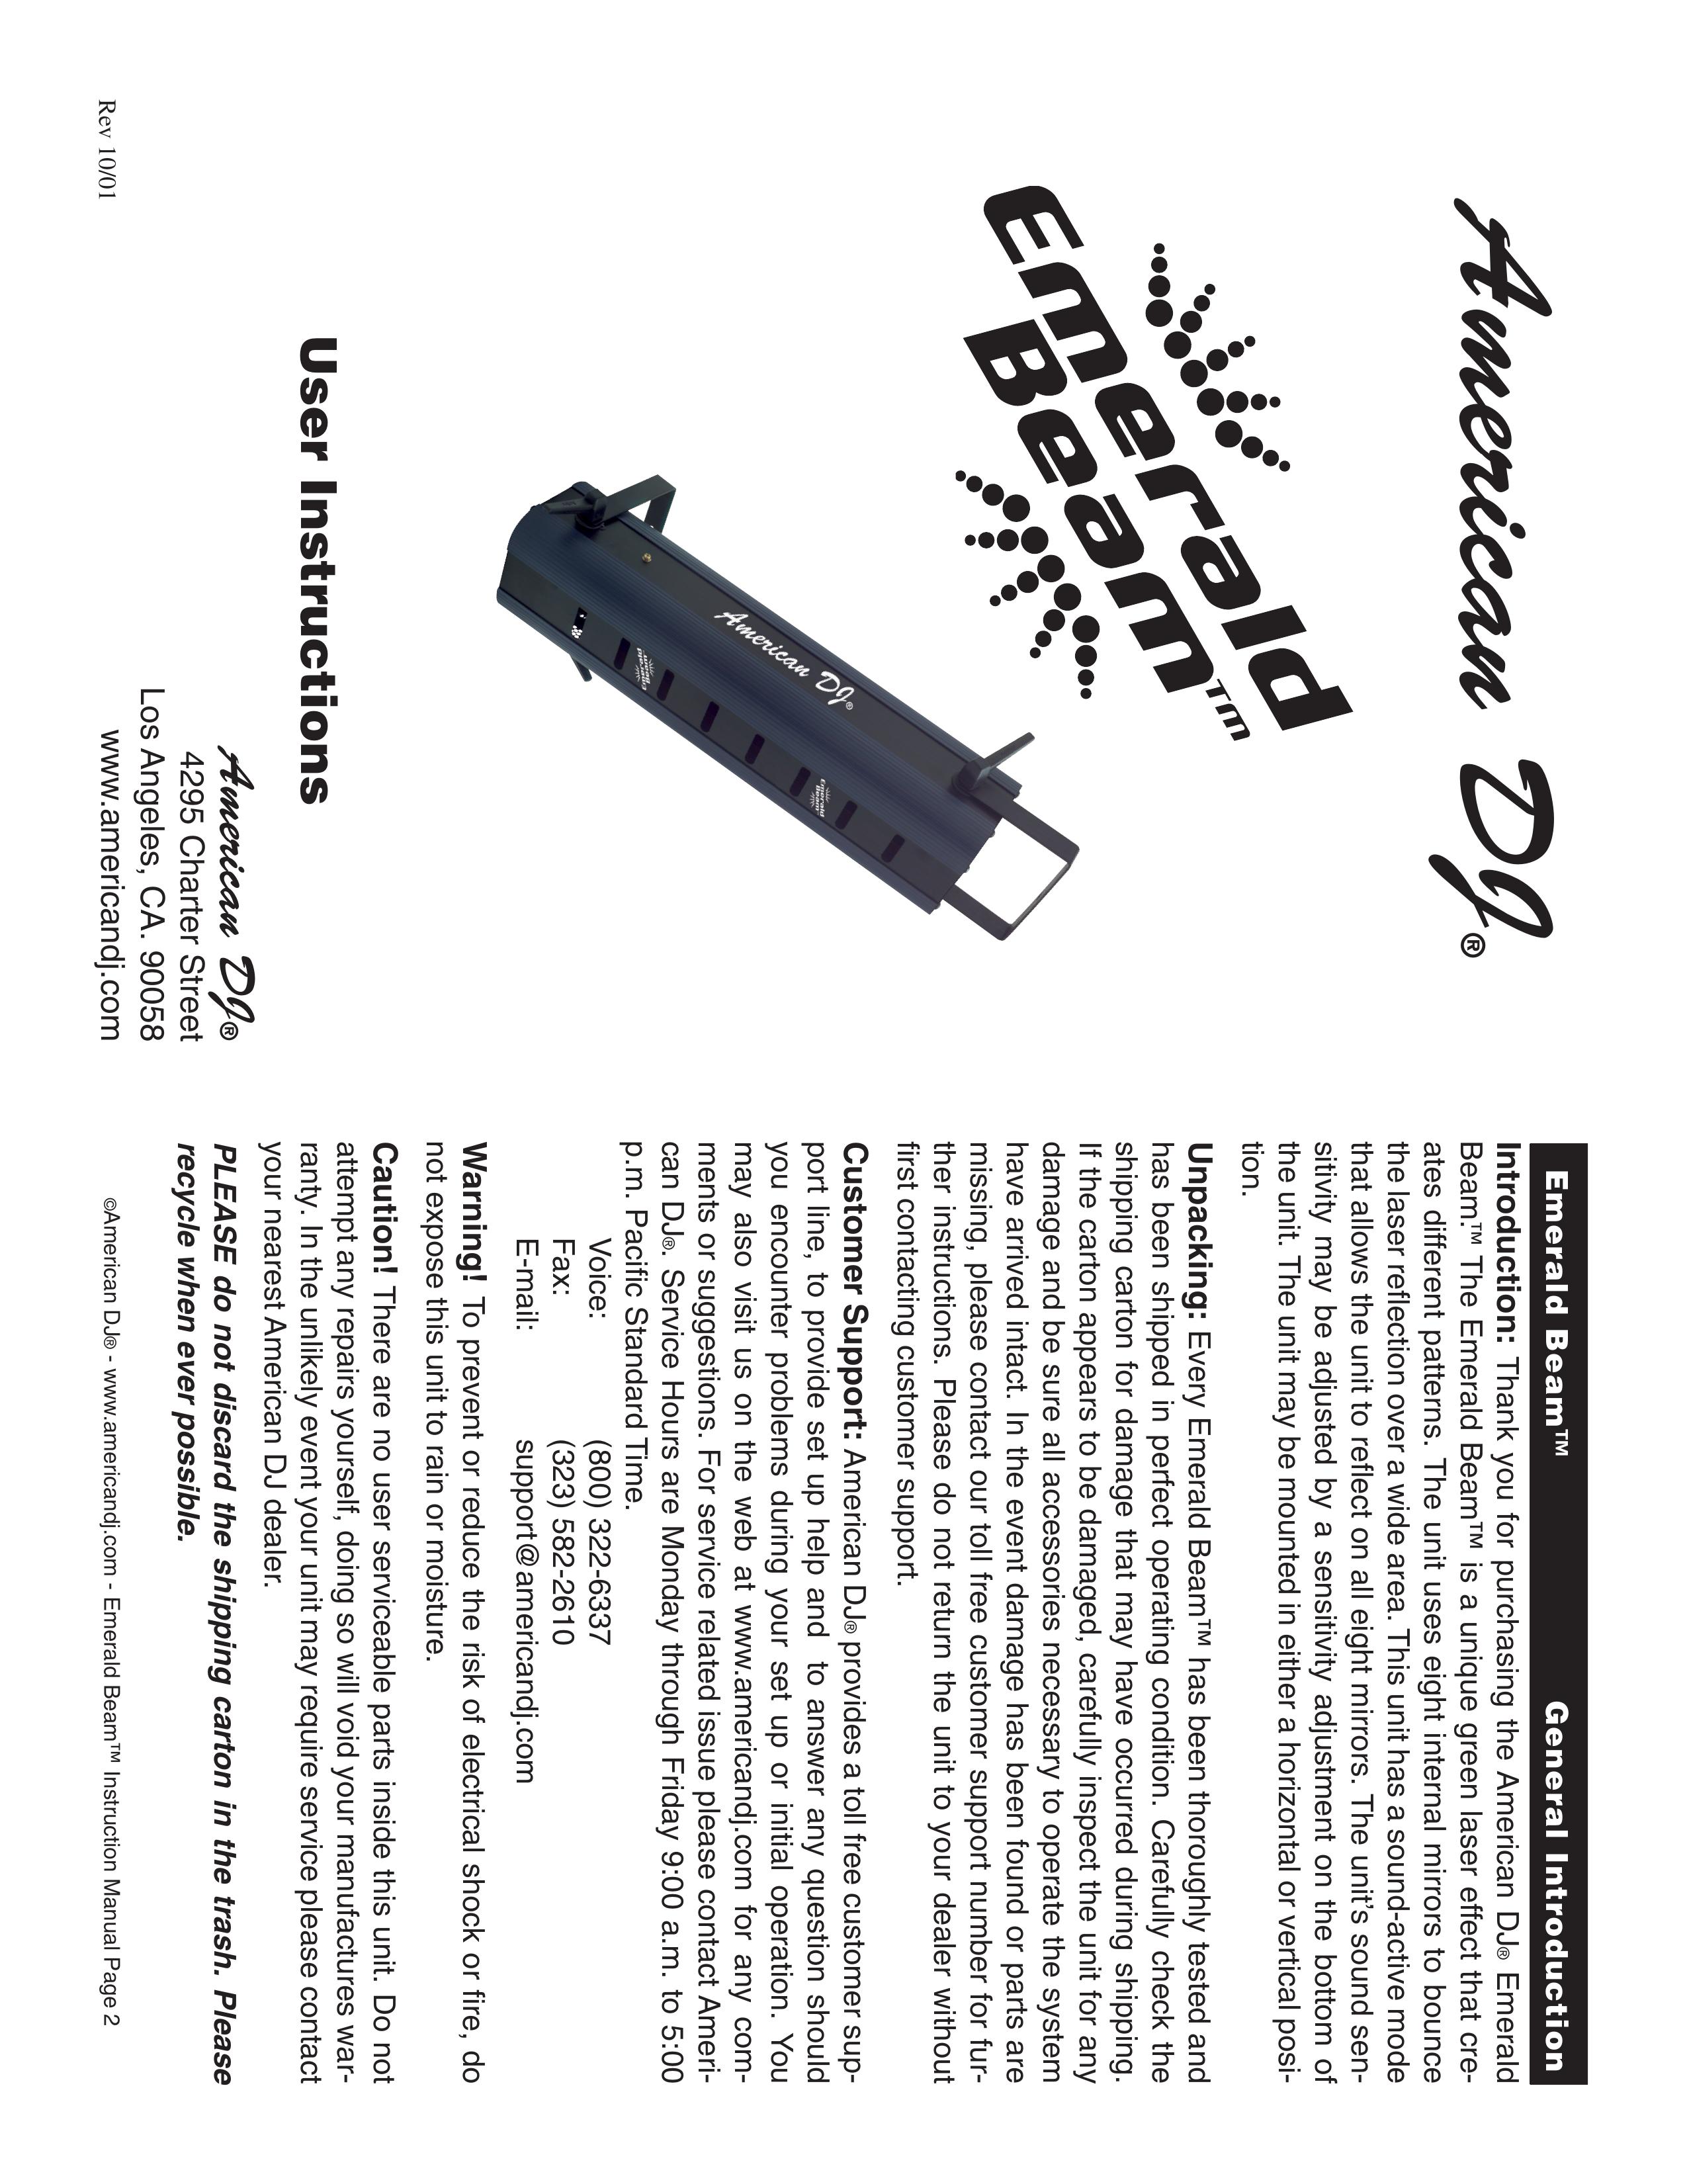 American DJ Emrald Beam DJ Equipment User Manual (Page 1)